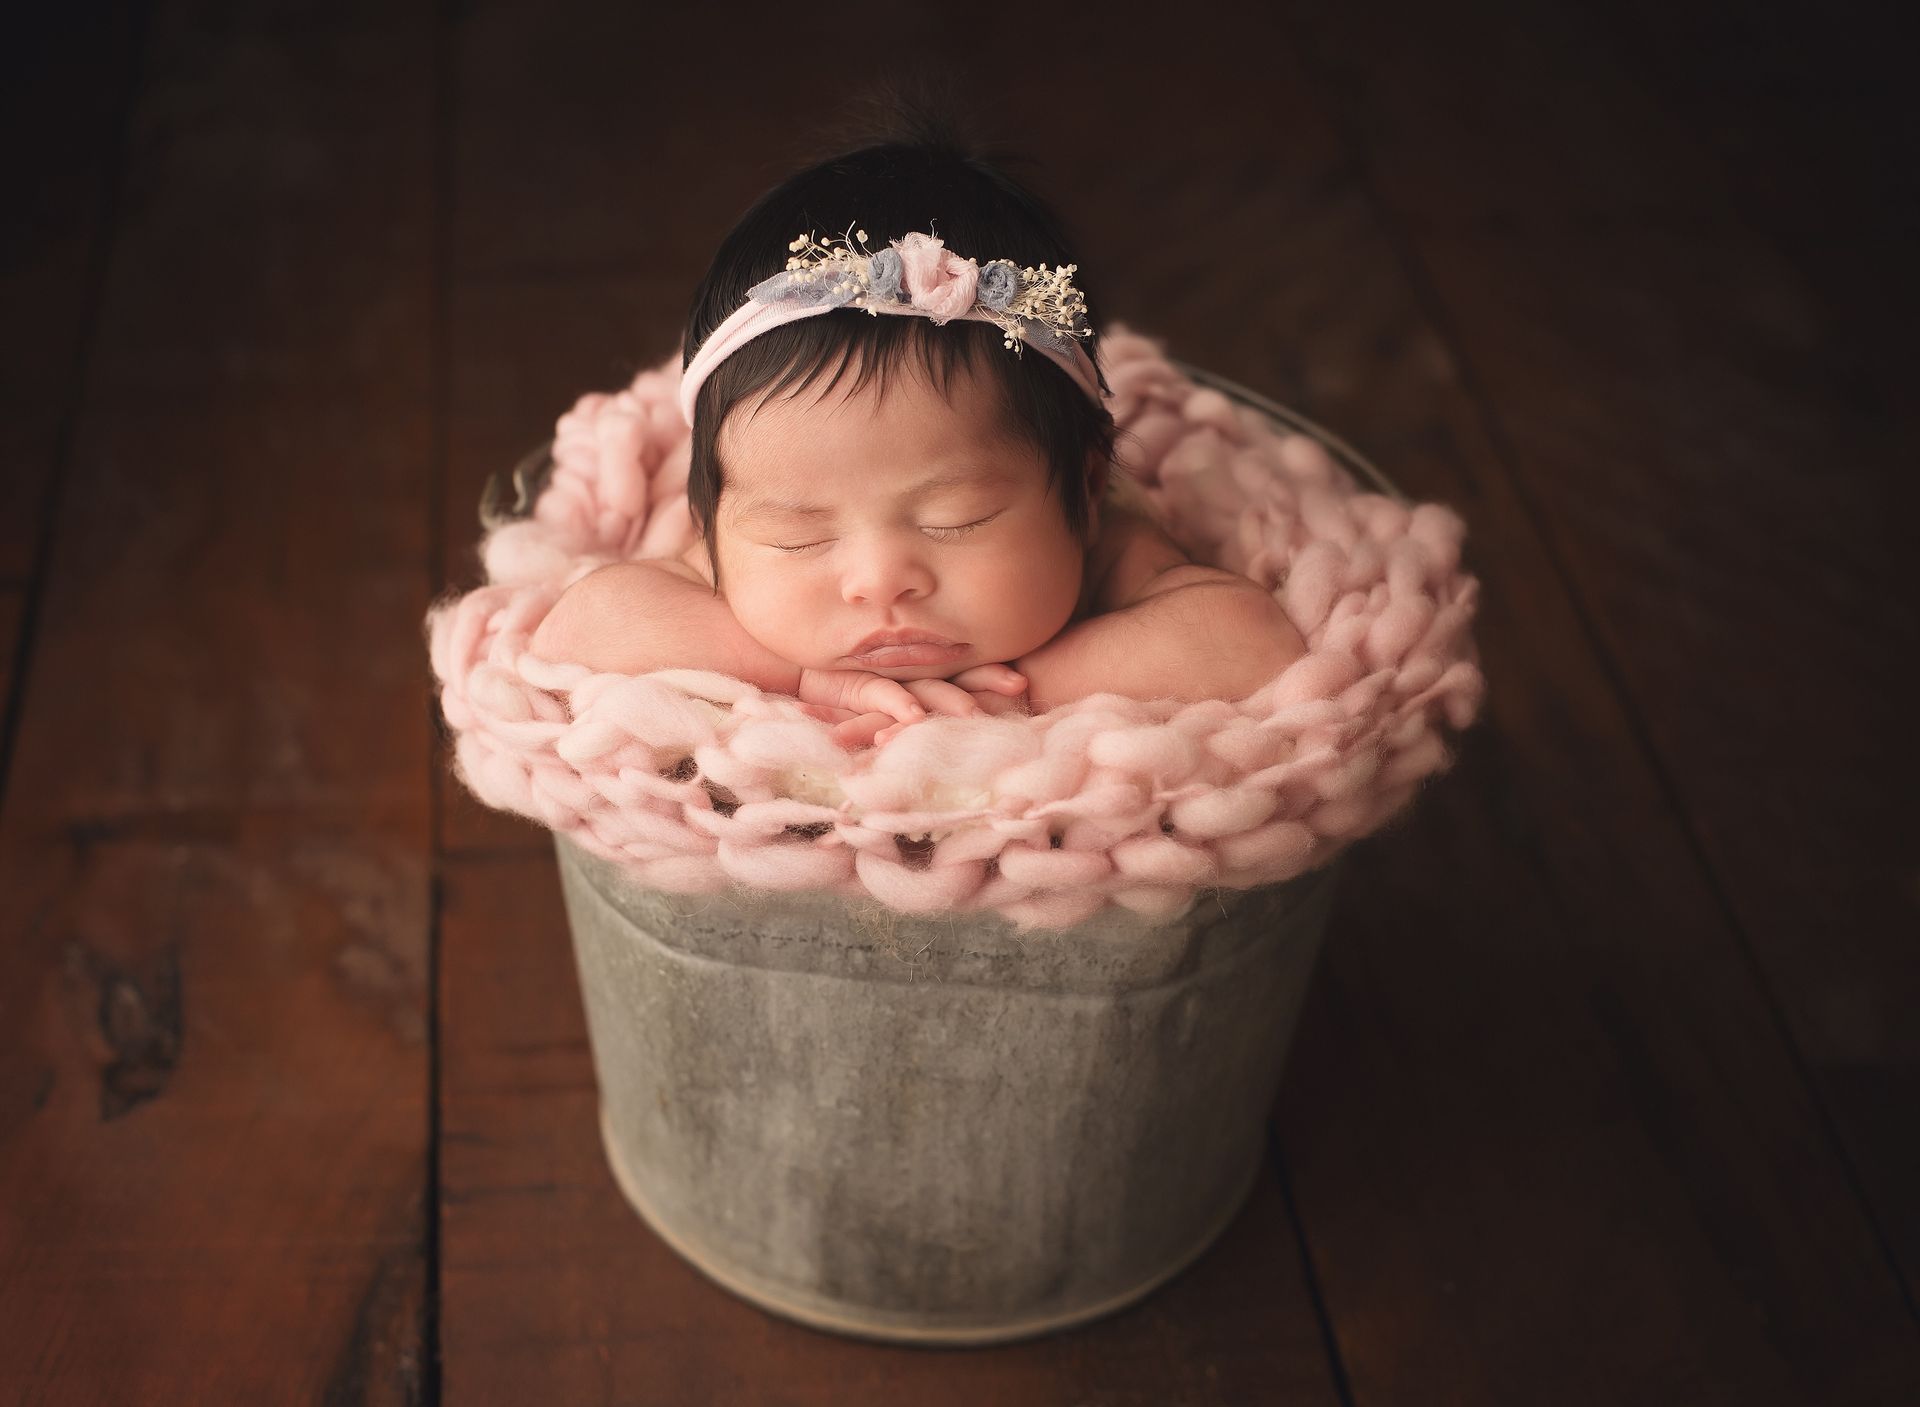 A newborn baby is sleeping in a bucket on a wooden floor.